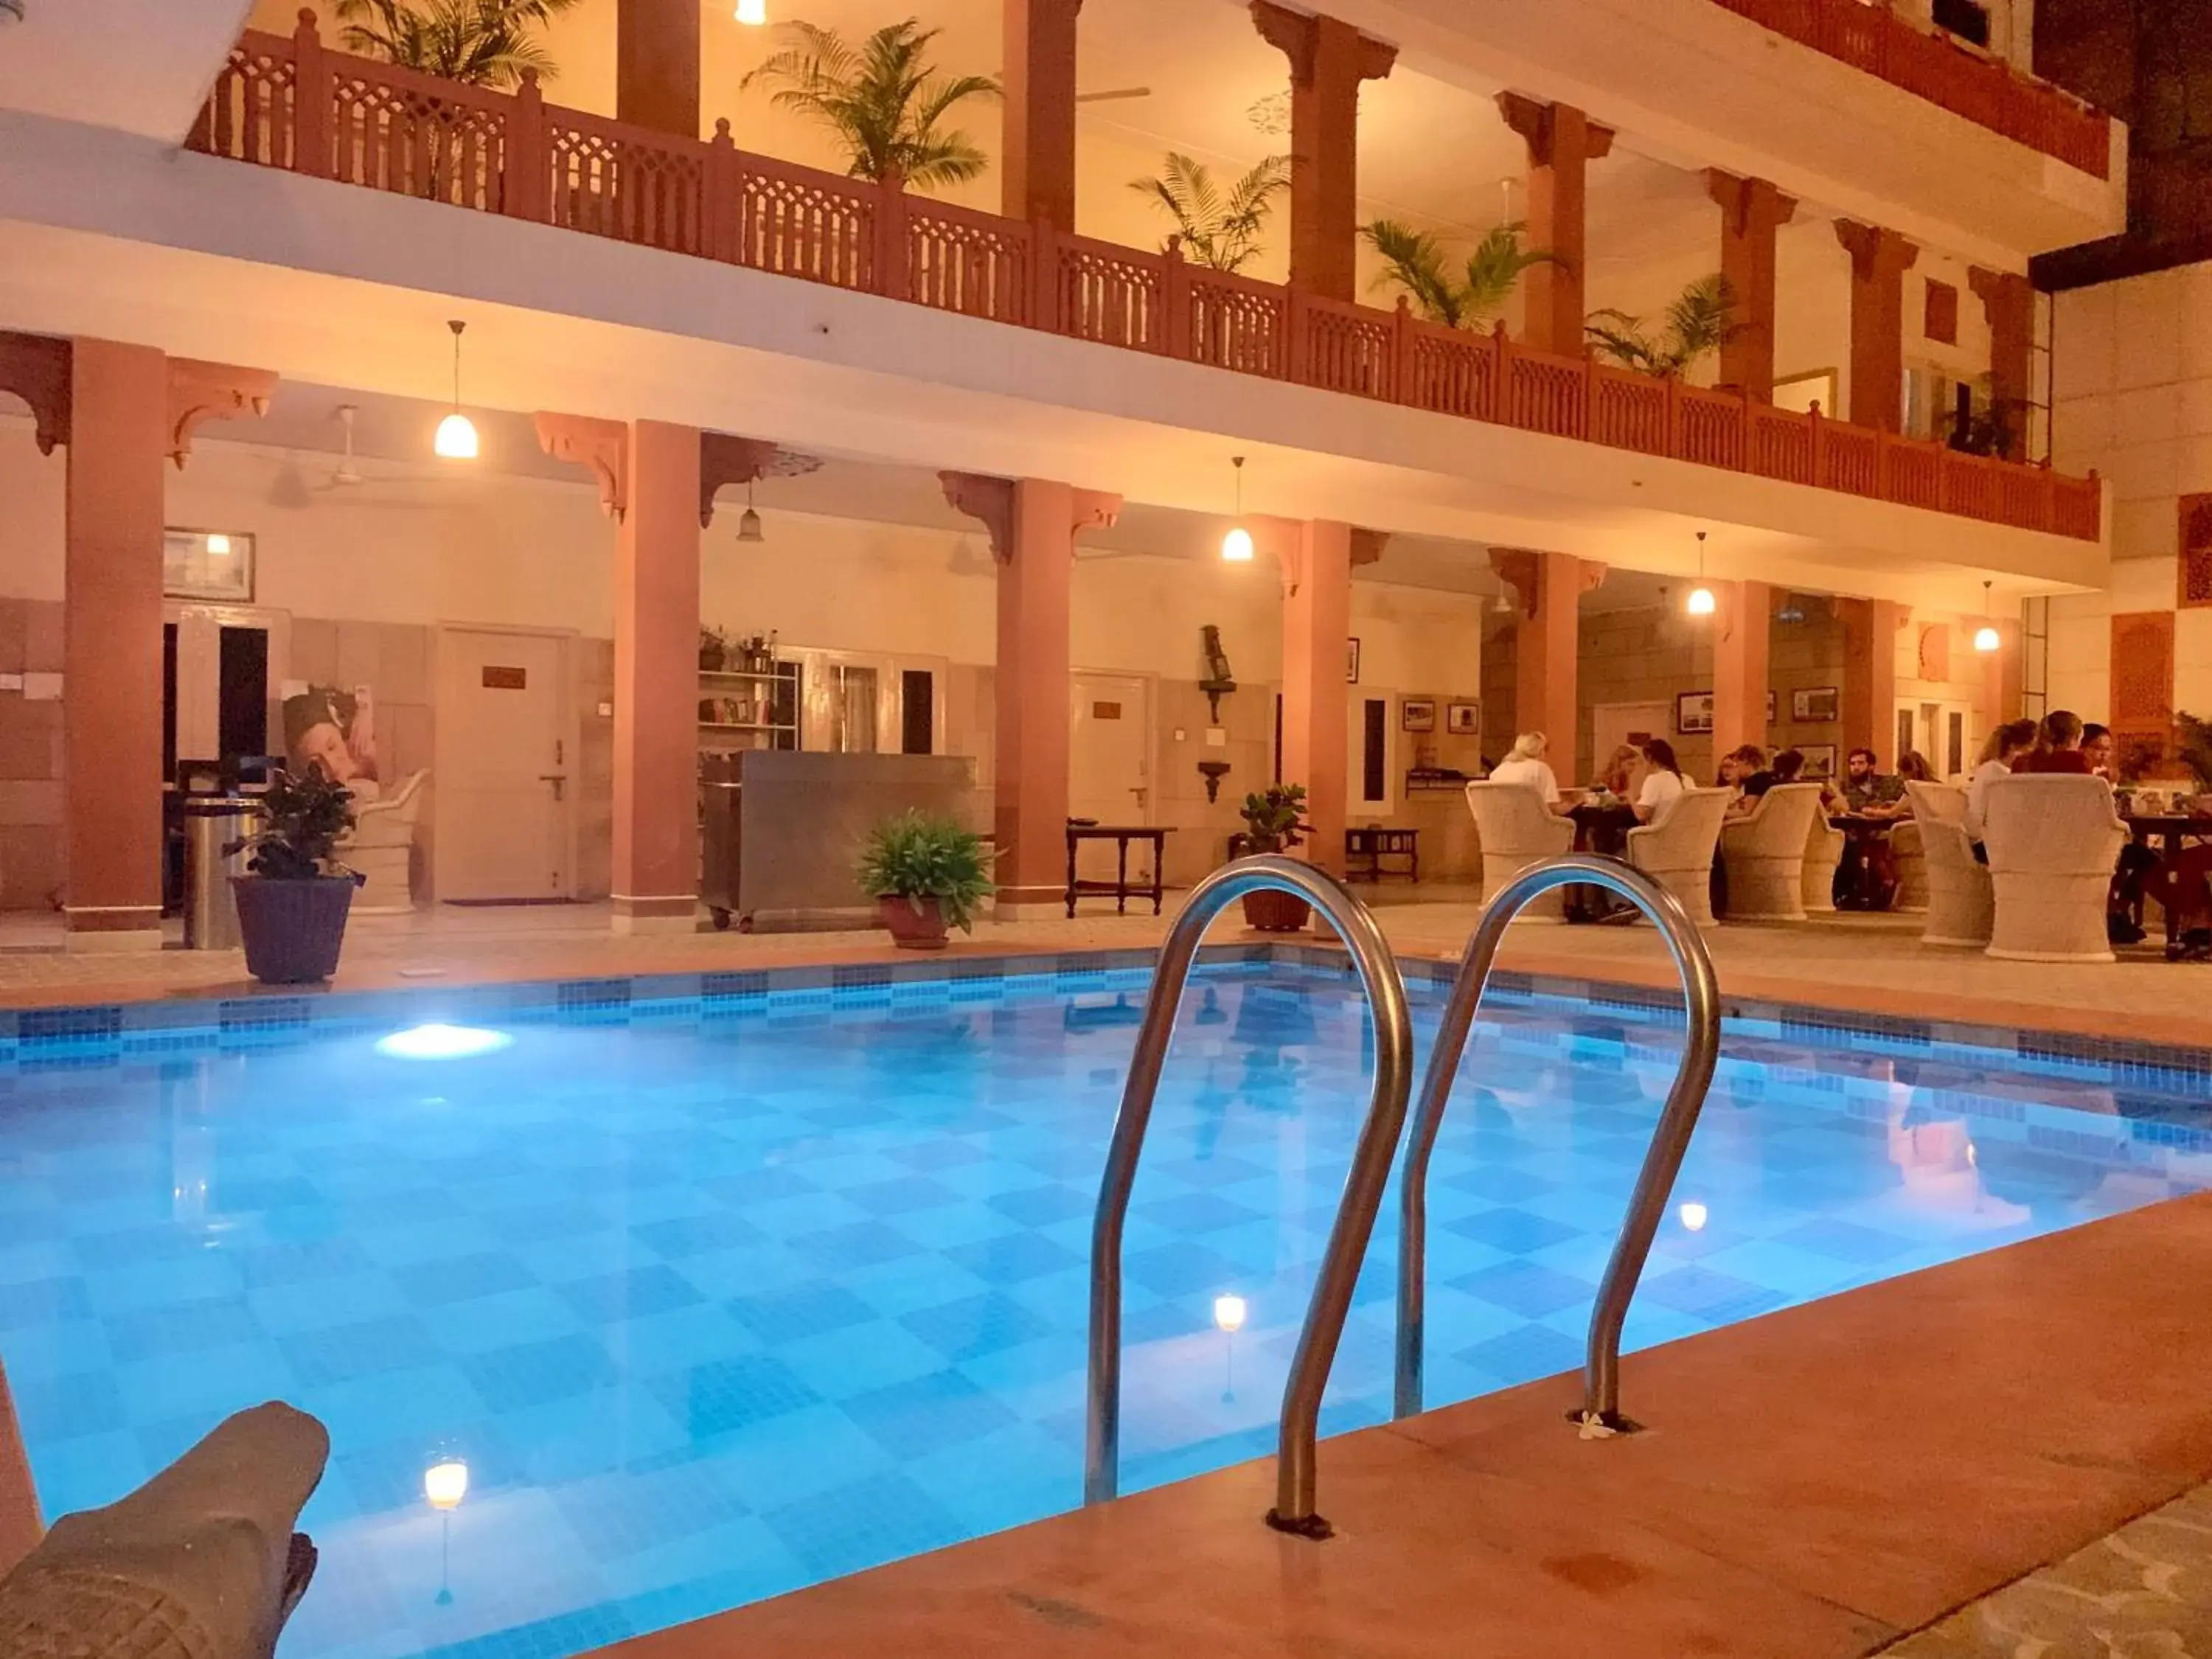 Swimming Pool in Suryaa Villa Jaipur - A Boutique Heritage Haveli